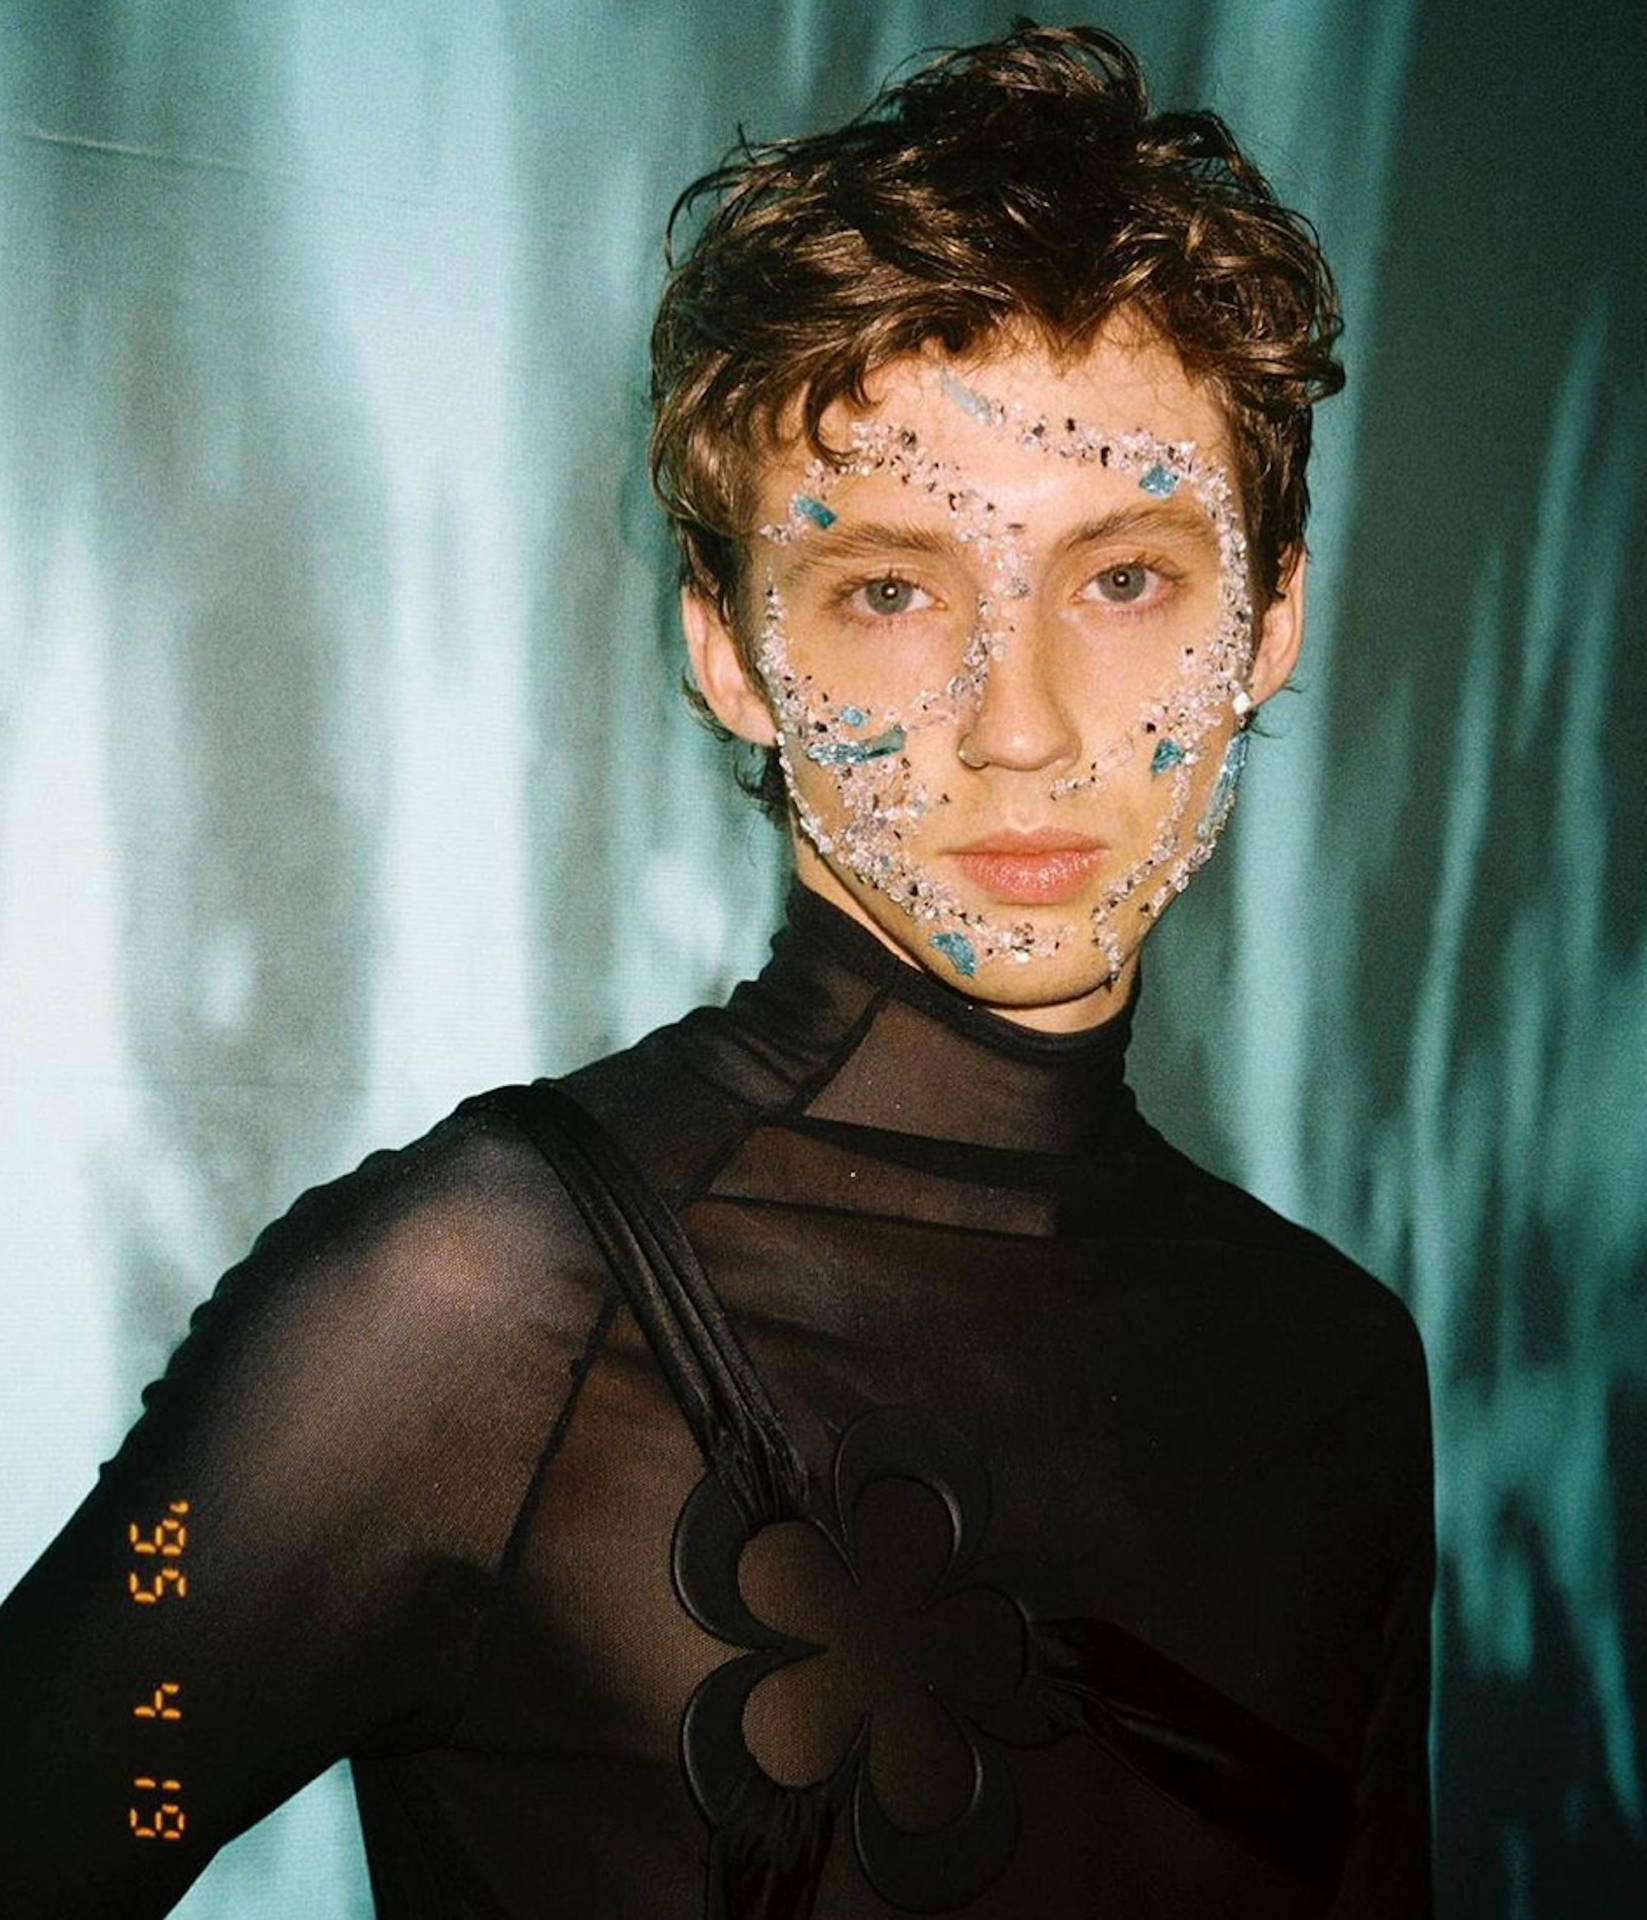 Rising Pop Star Troye Sivan's Radiant Crystal Face Art